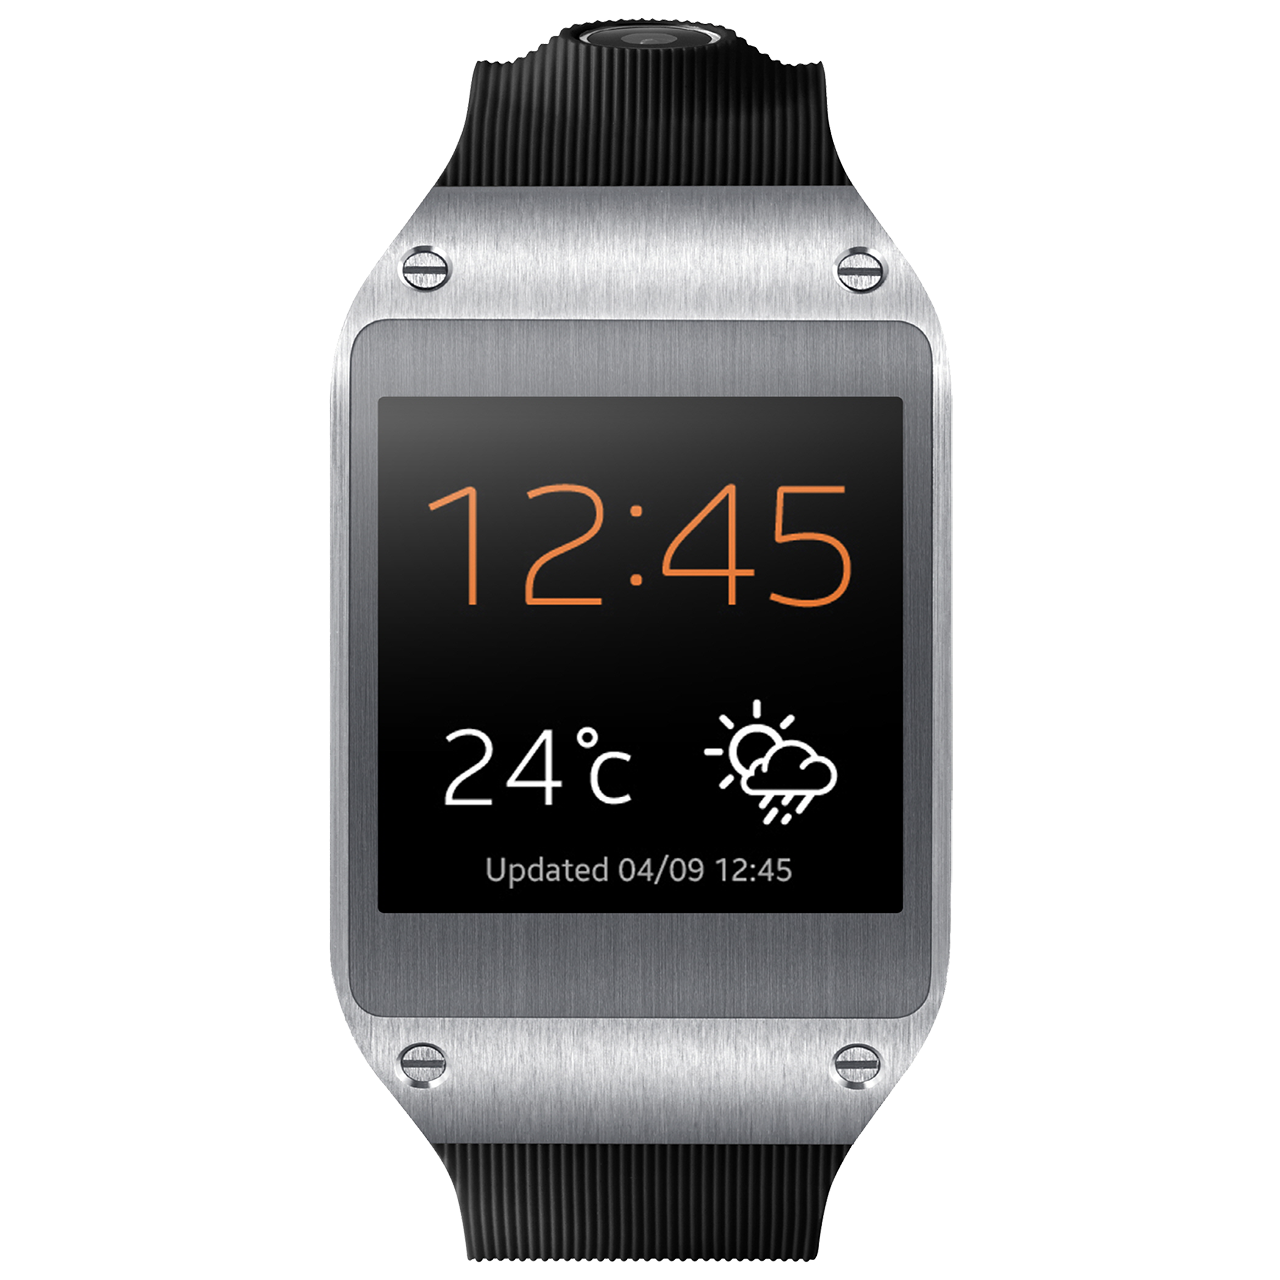 Wristwatch smartphone Samsung PNG image